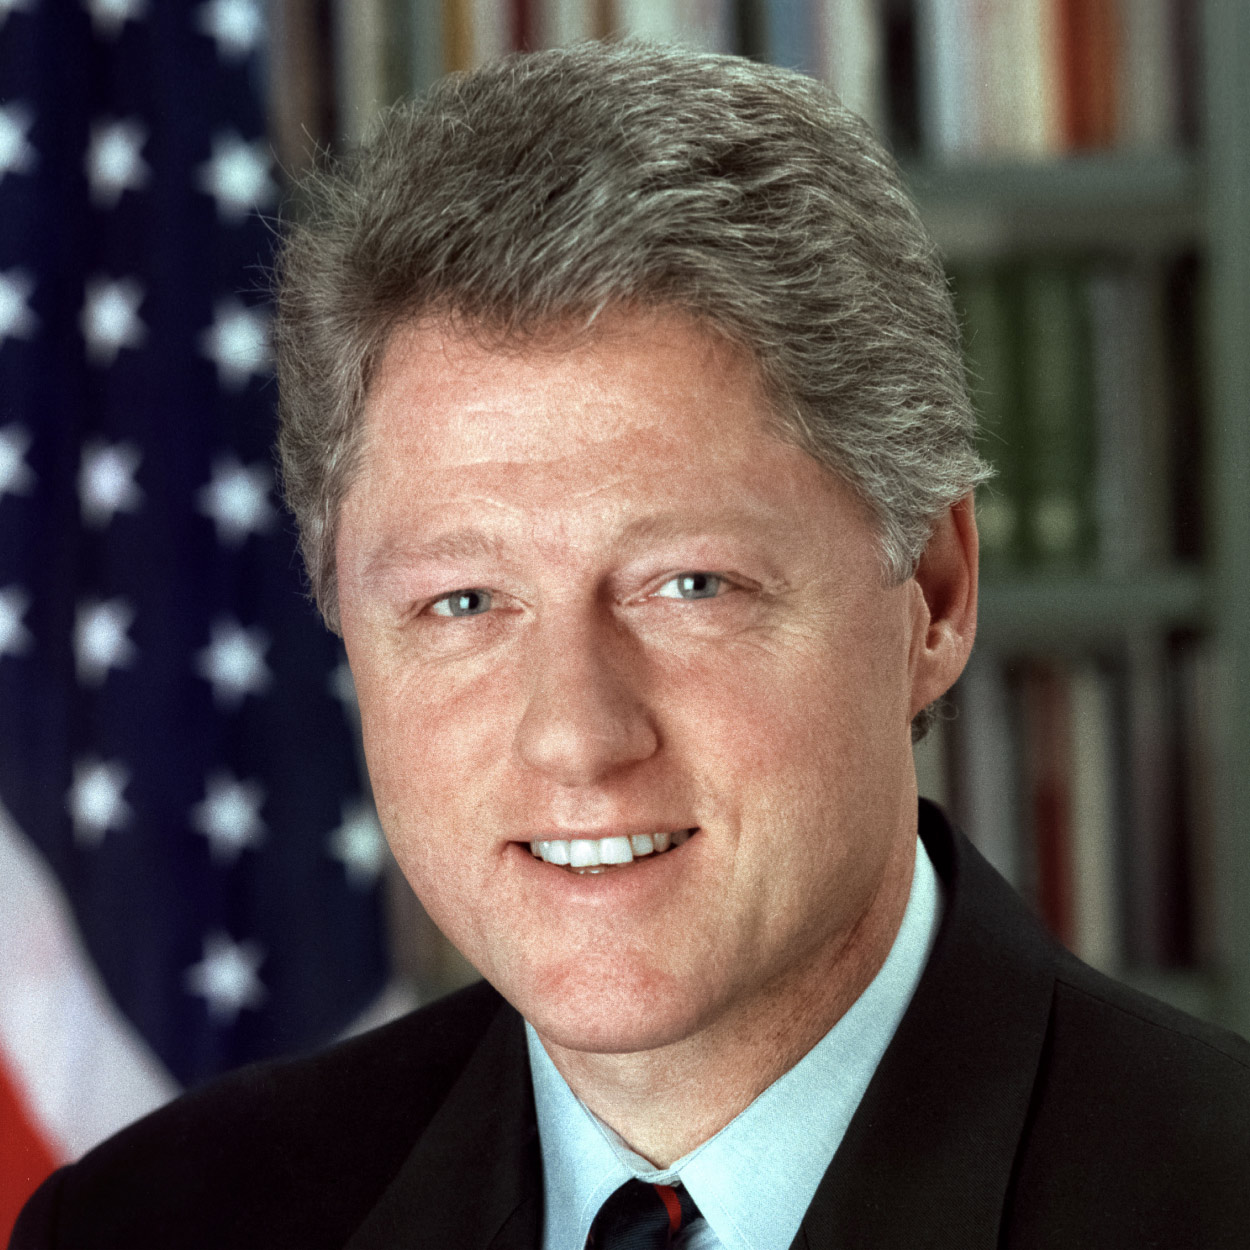 William J. Clinton | The White House